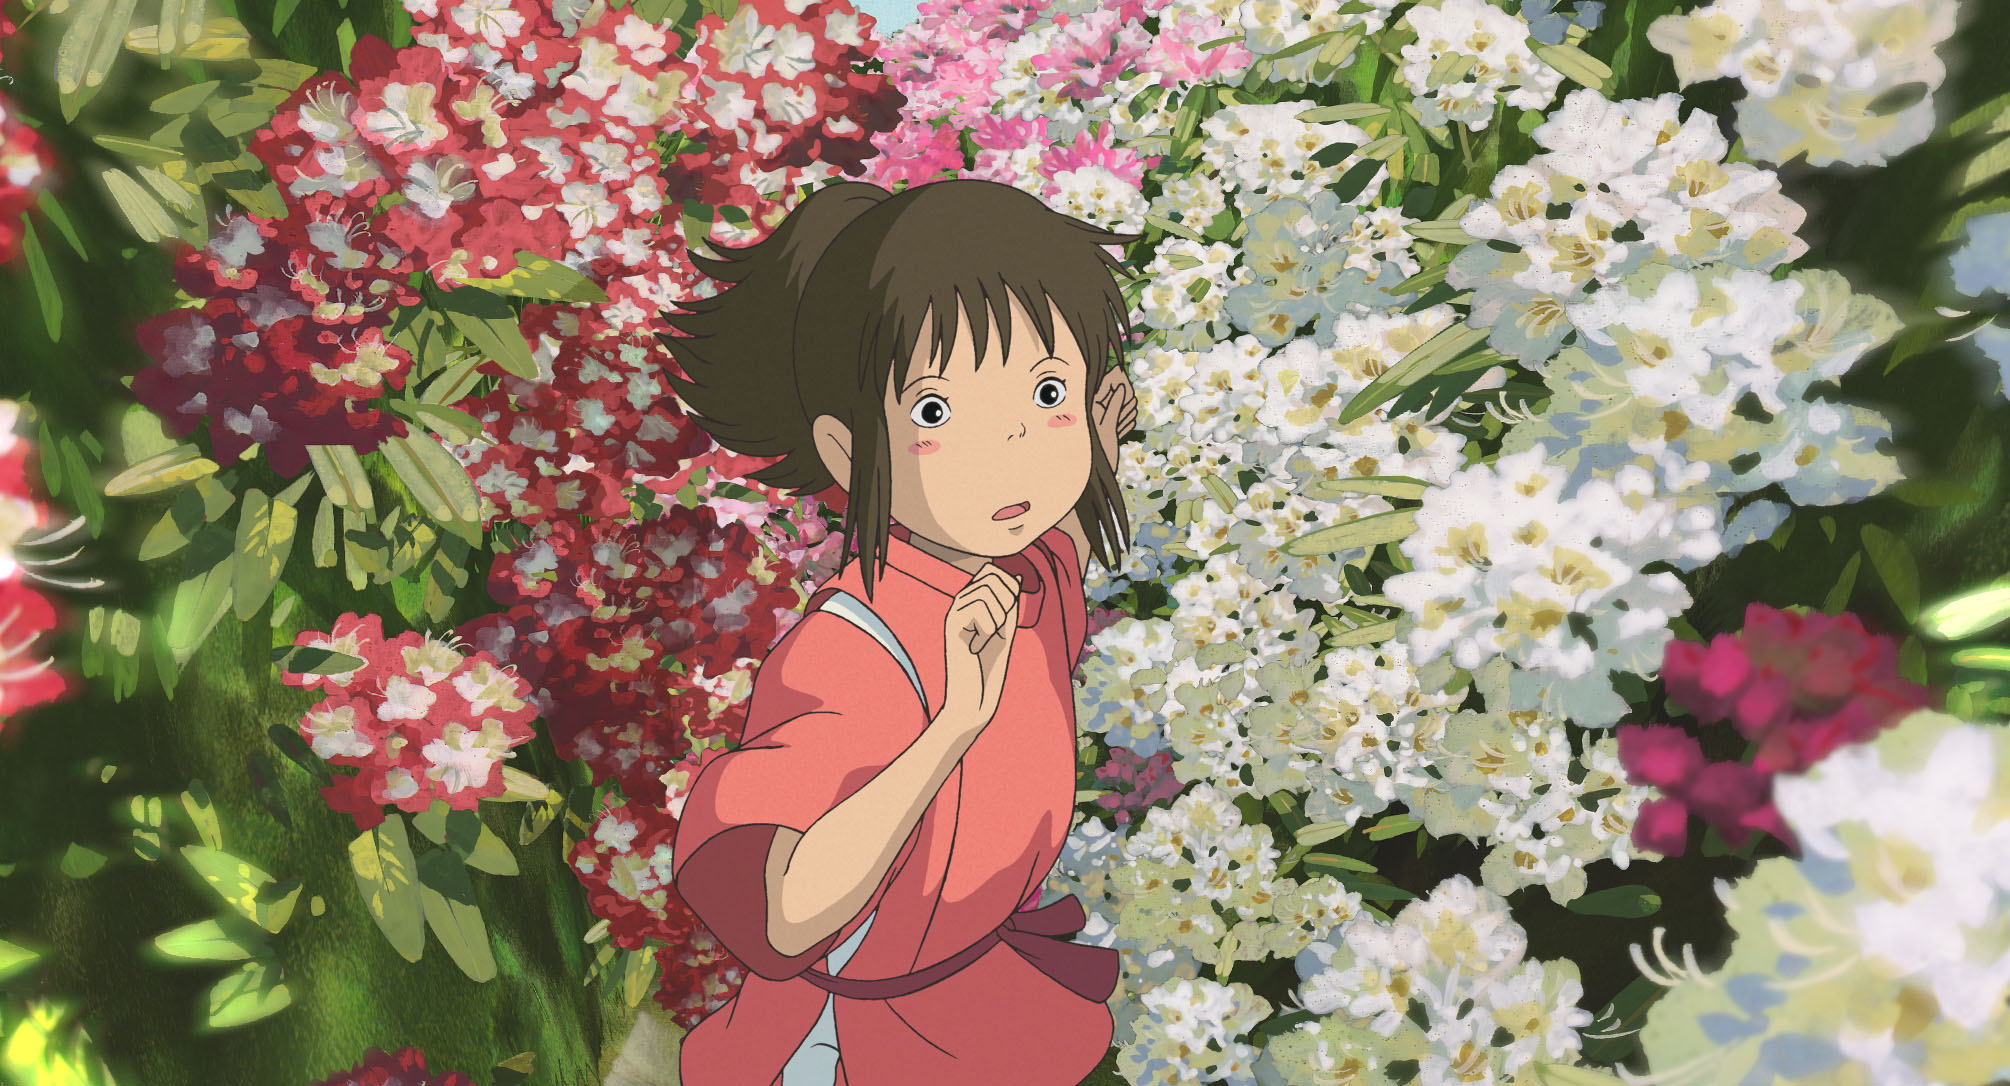 Mon Premier Festival 2022 - Le Voyage de Chihiro de Hayao Miyazaki